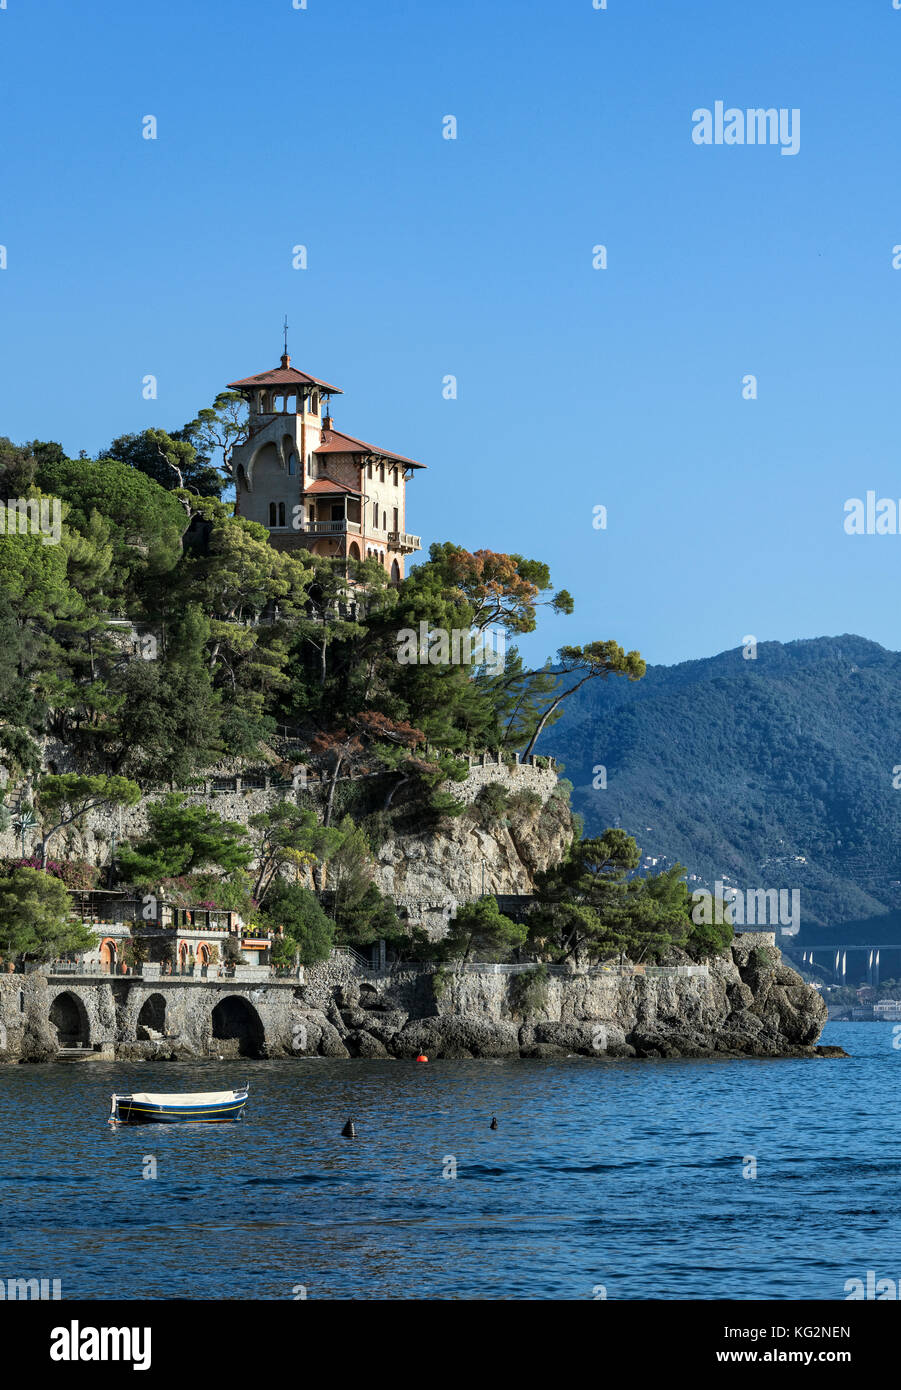 Picturesque waterfront house, Portofino, Liguria, Italy. Stock Photo